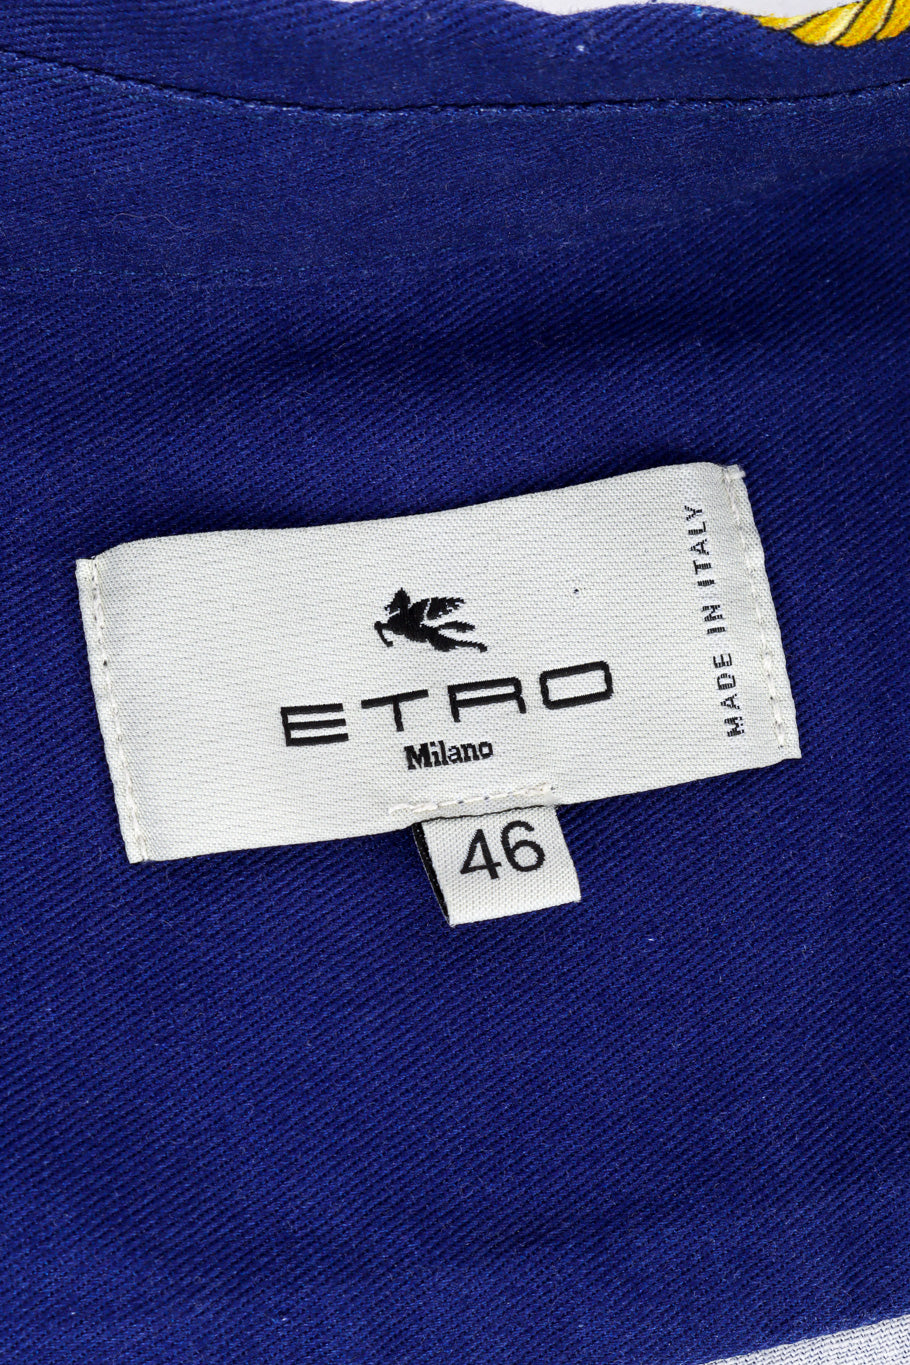 Etro 2021 S/S Nautical Flag Cotton Dress signature label @recess la